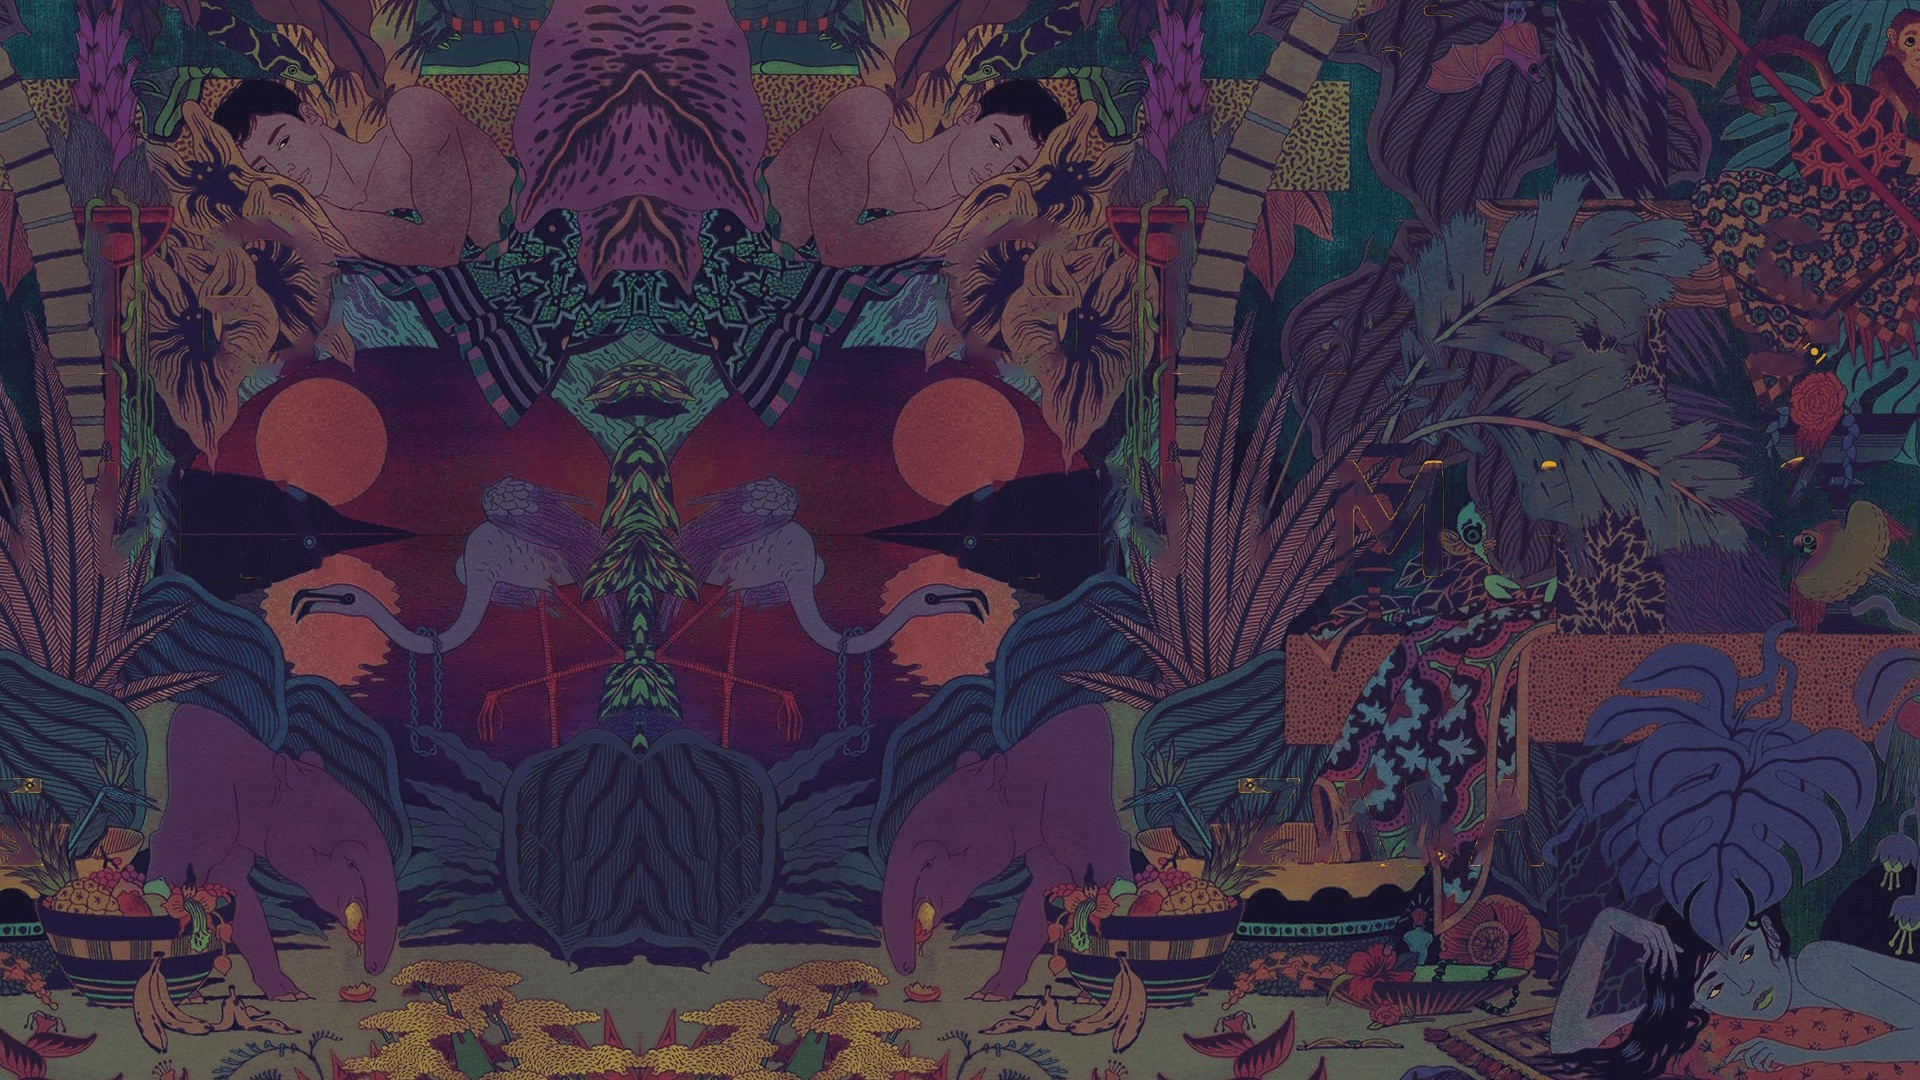 I turned the Zaba album art into a desktop background